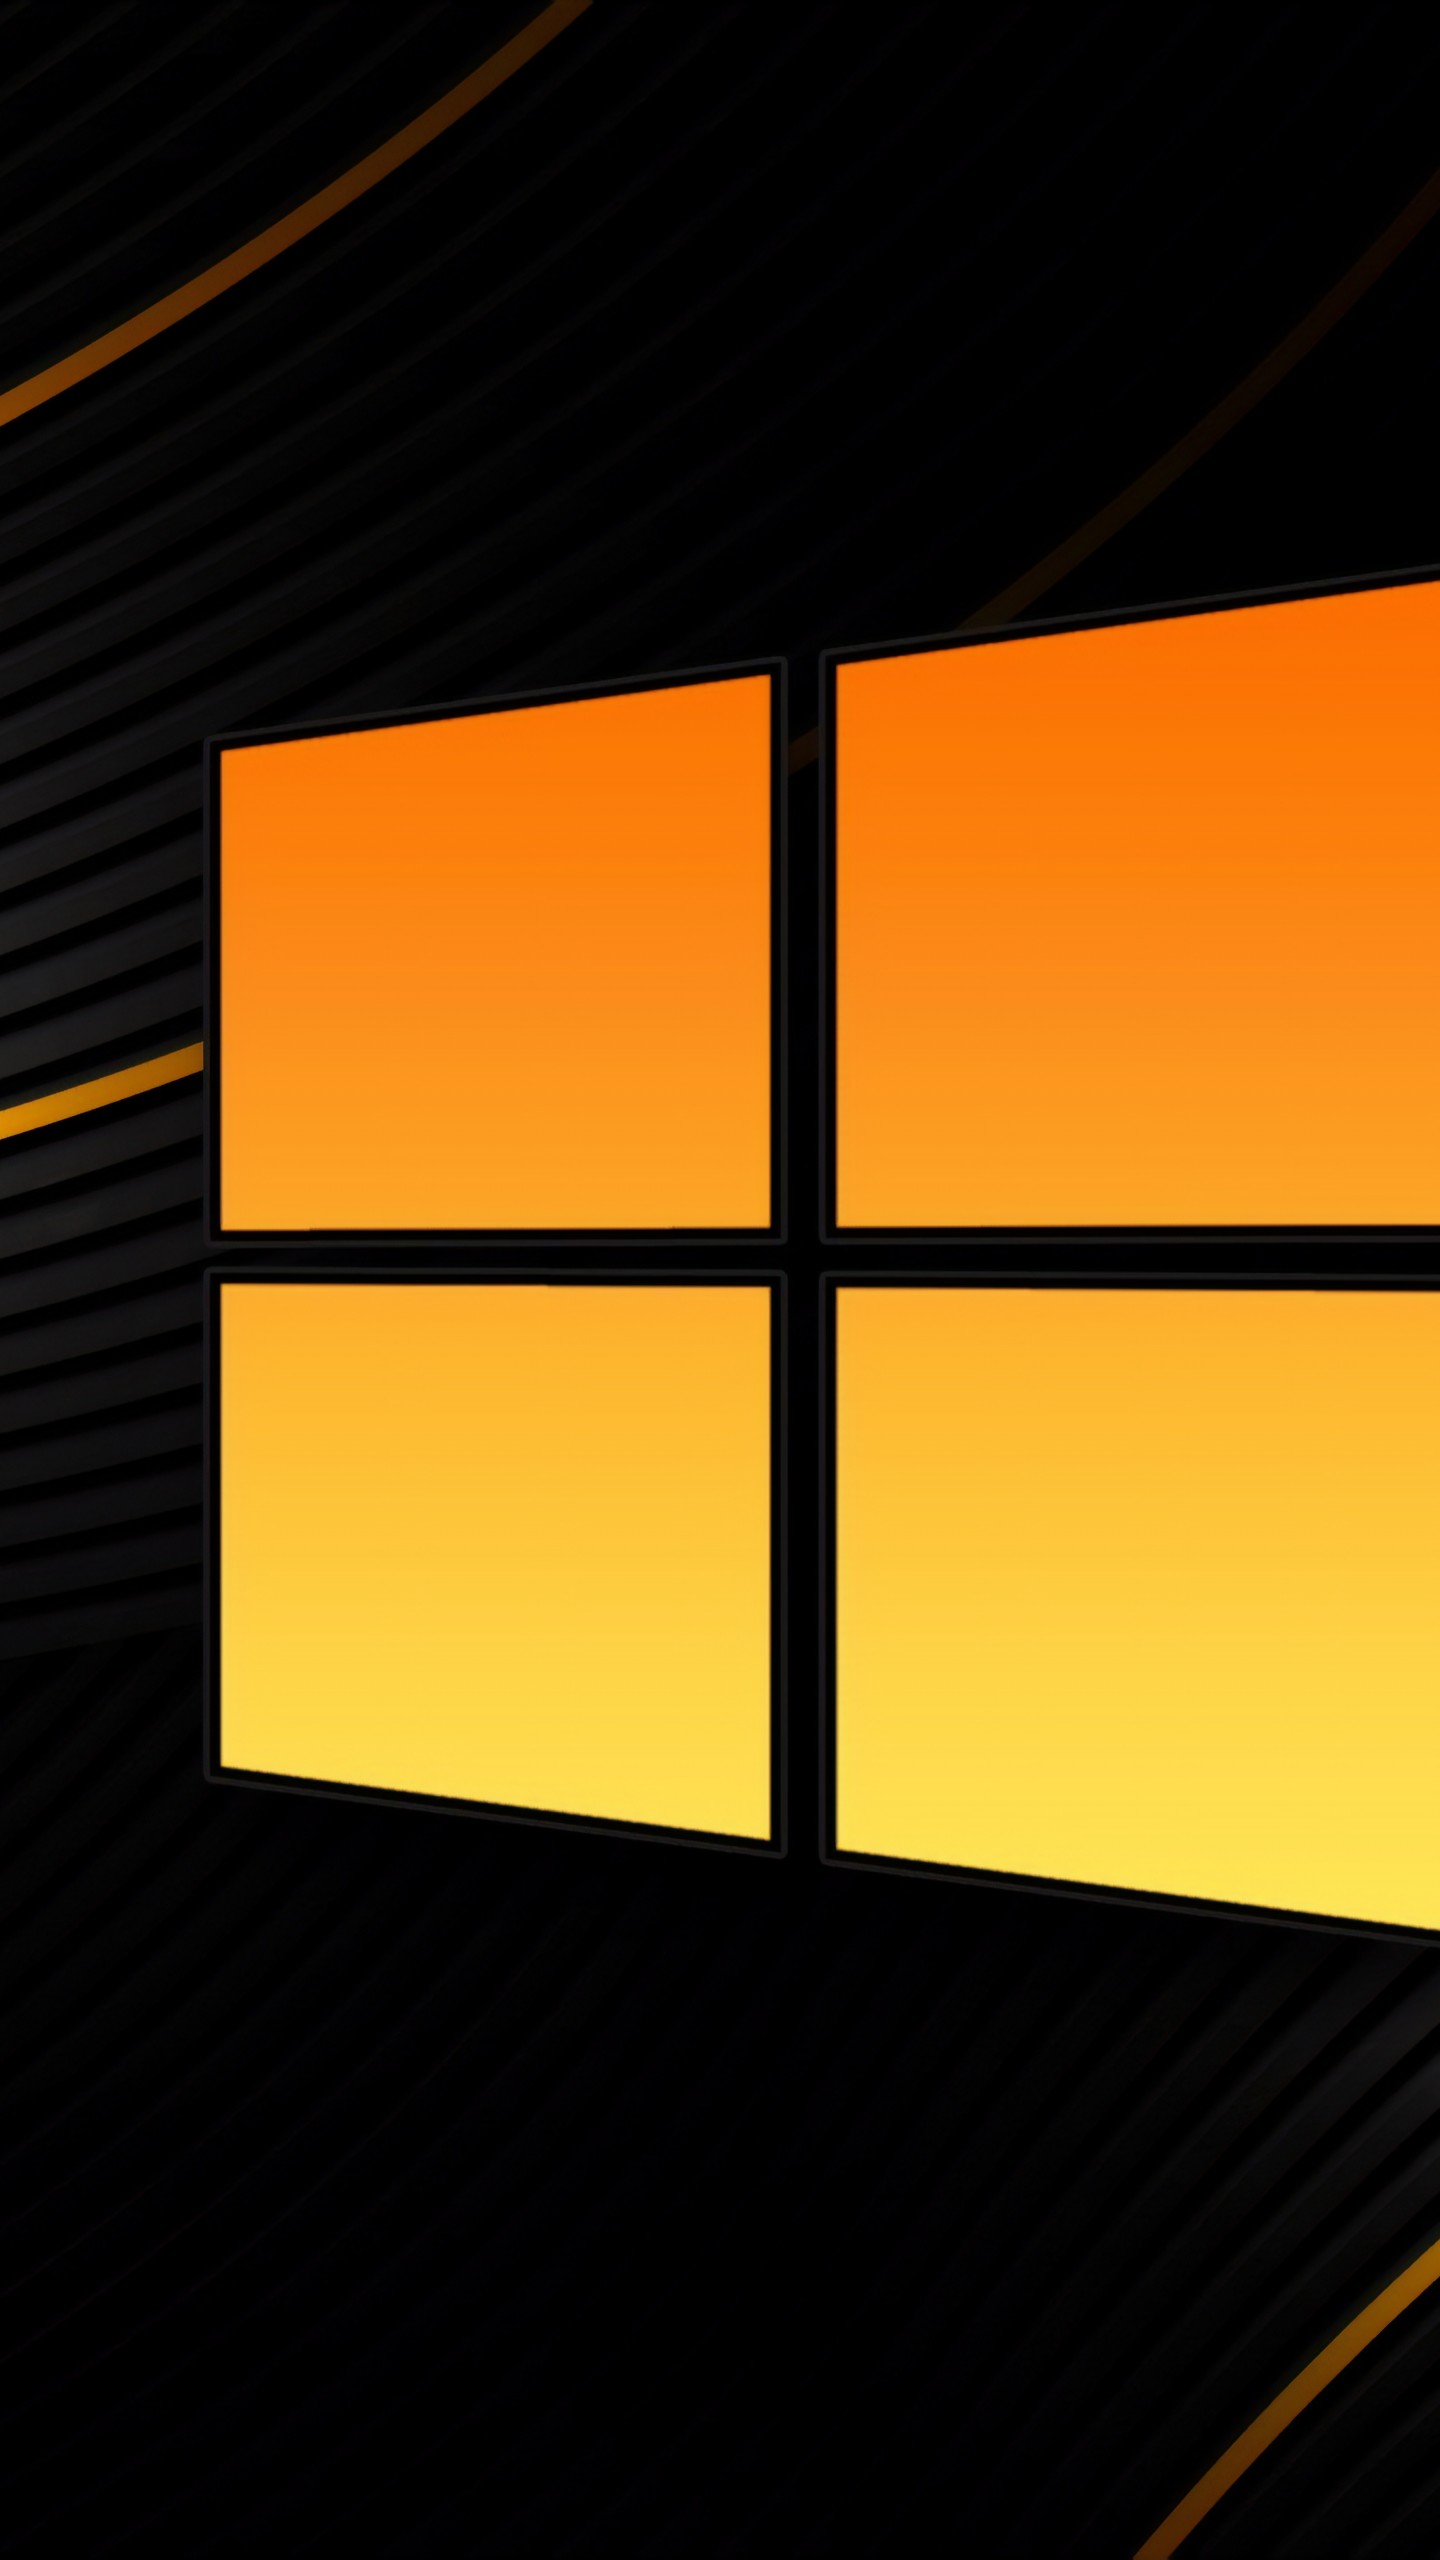 Abstract / Windows 10 Wallpaper - Windows 10 Black Orange , HD Wallpaper & Backgrounds